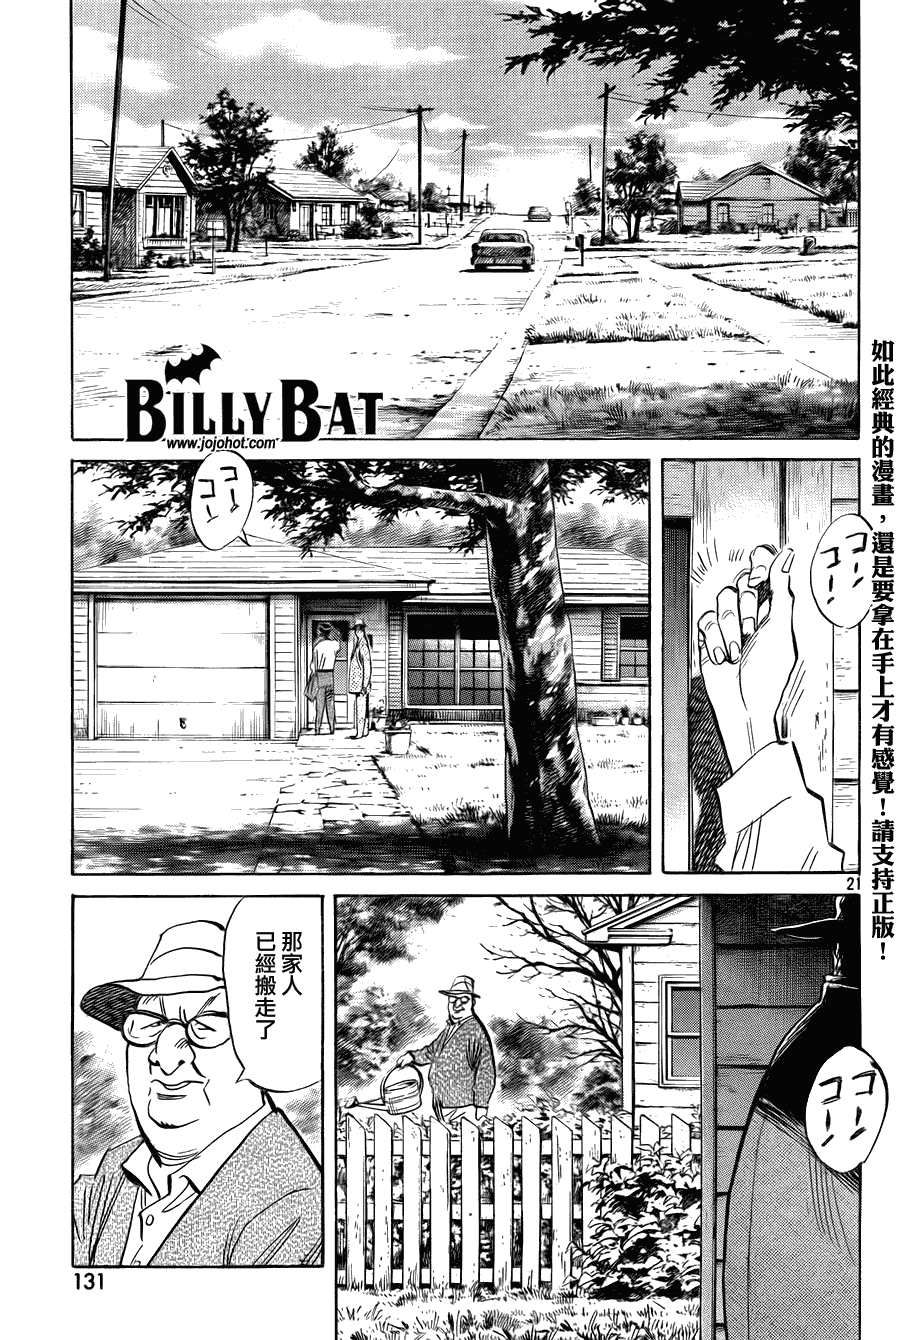 Billy_Bat - 第43話 - 1